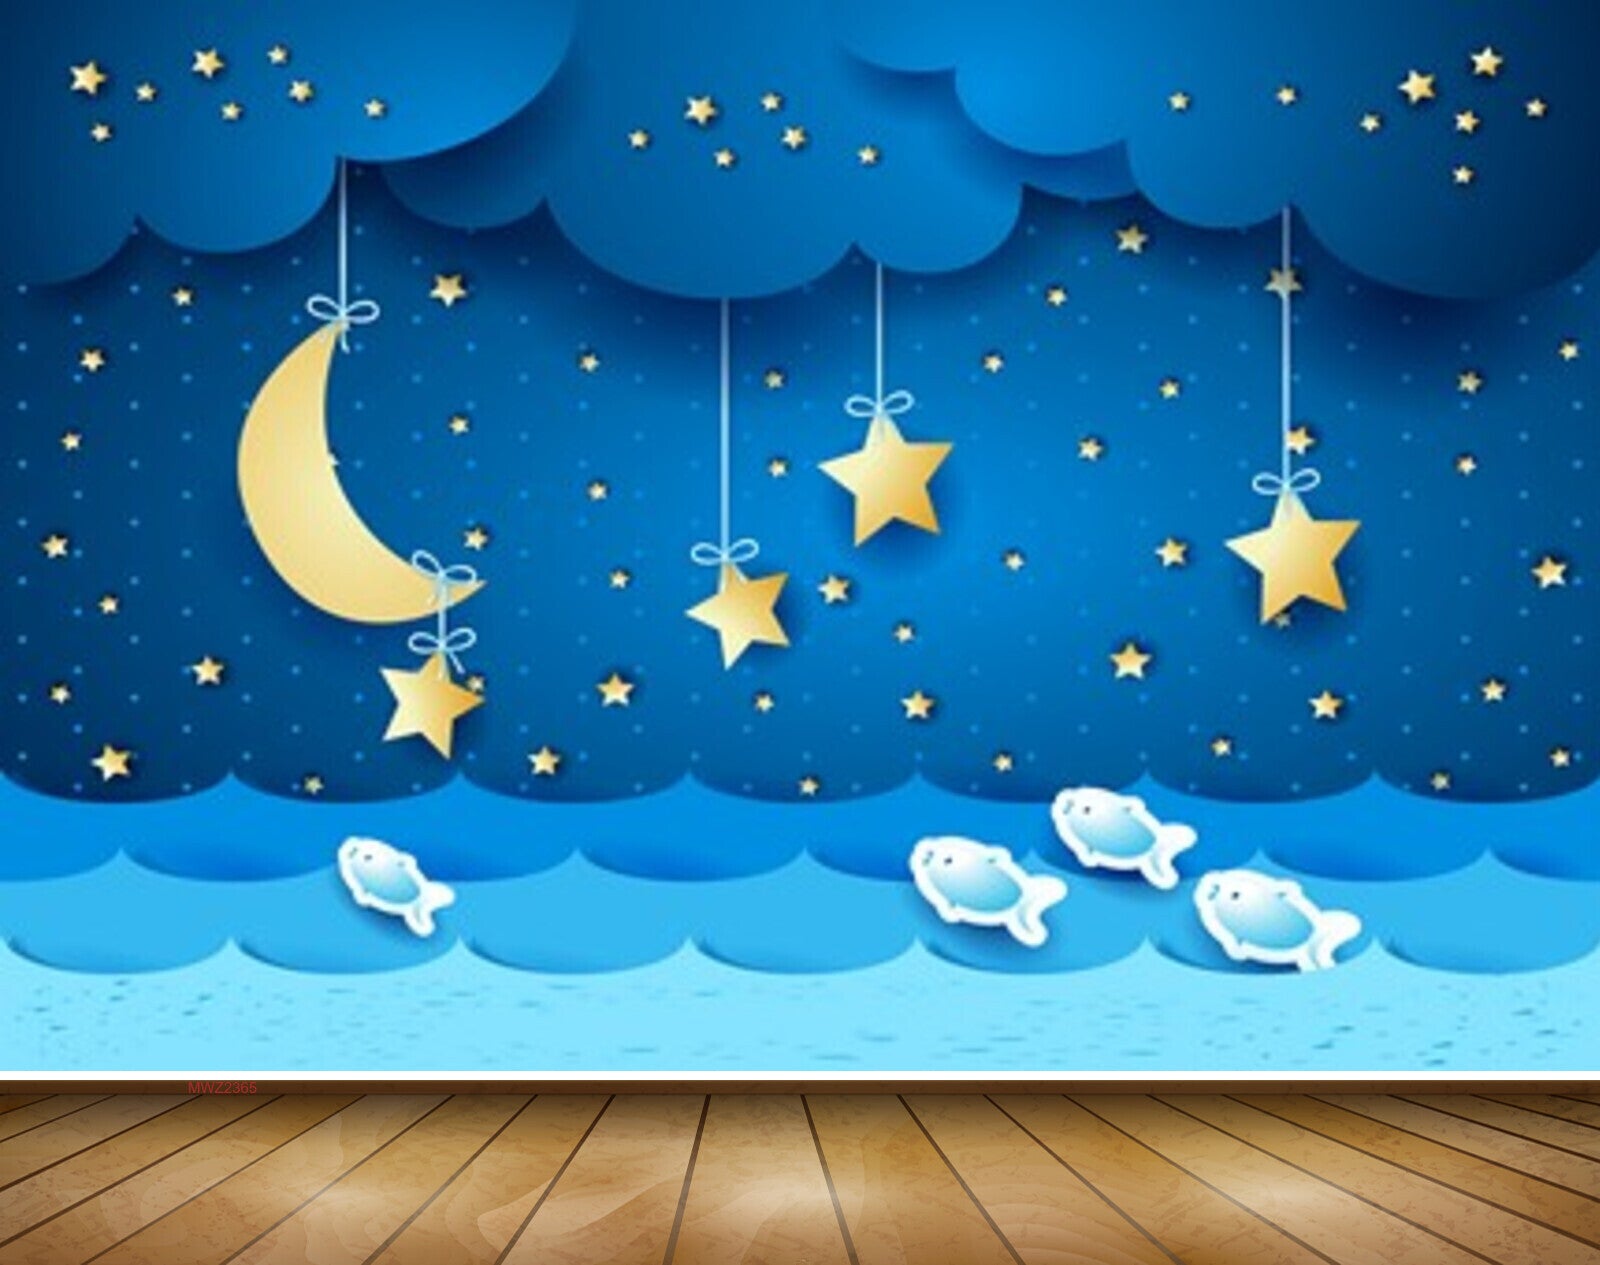 Avikalp MWZ2365 Golden Hanging Stars Moon Fishes Night Kids HD Wallpaper